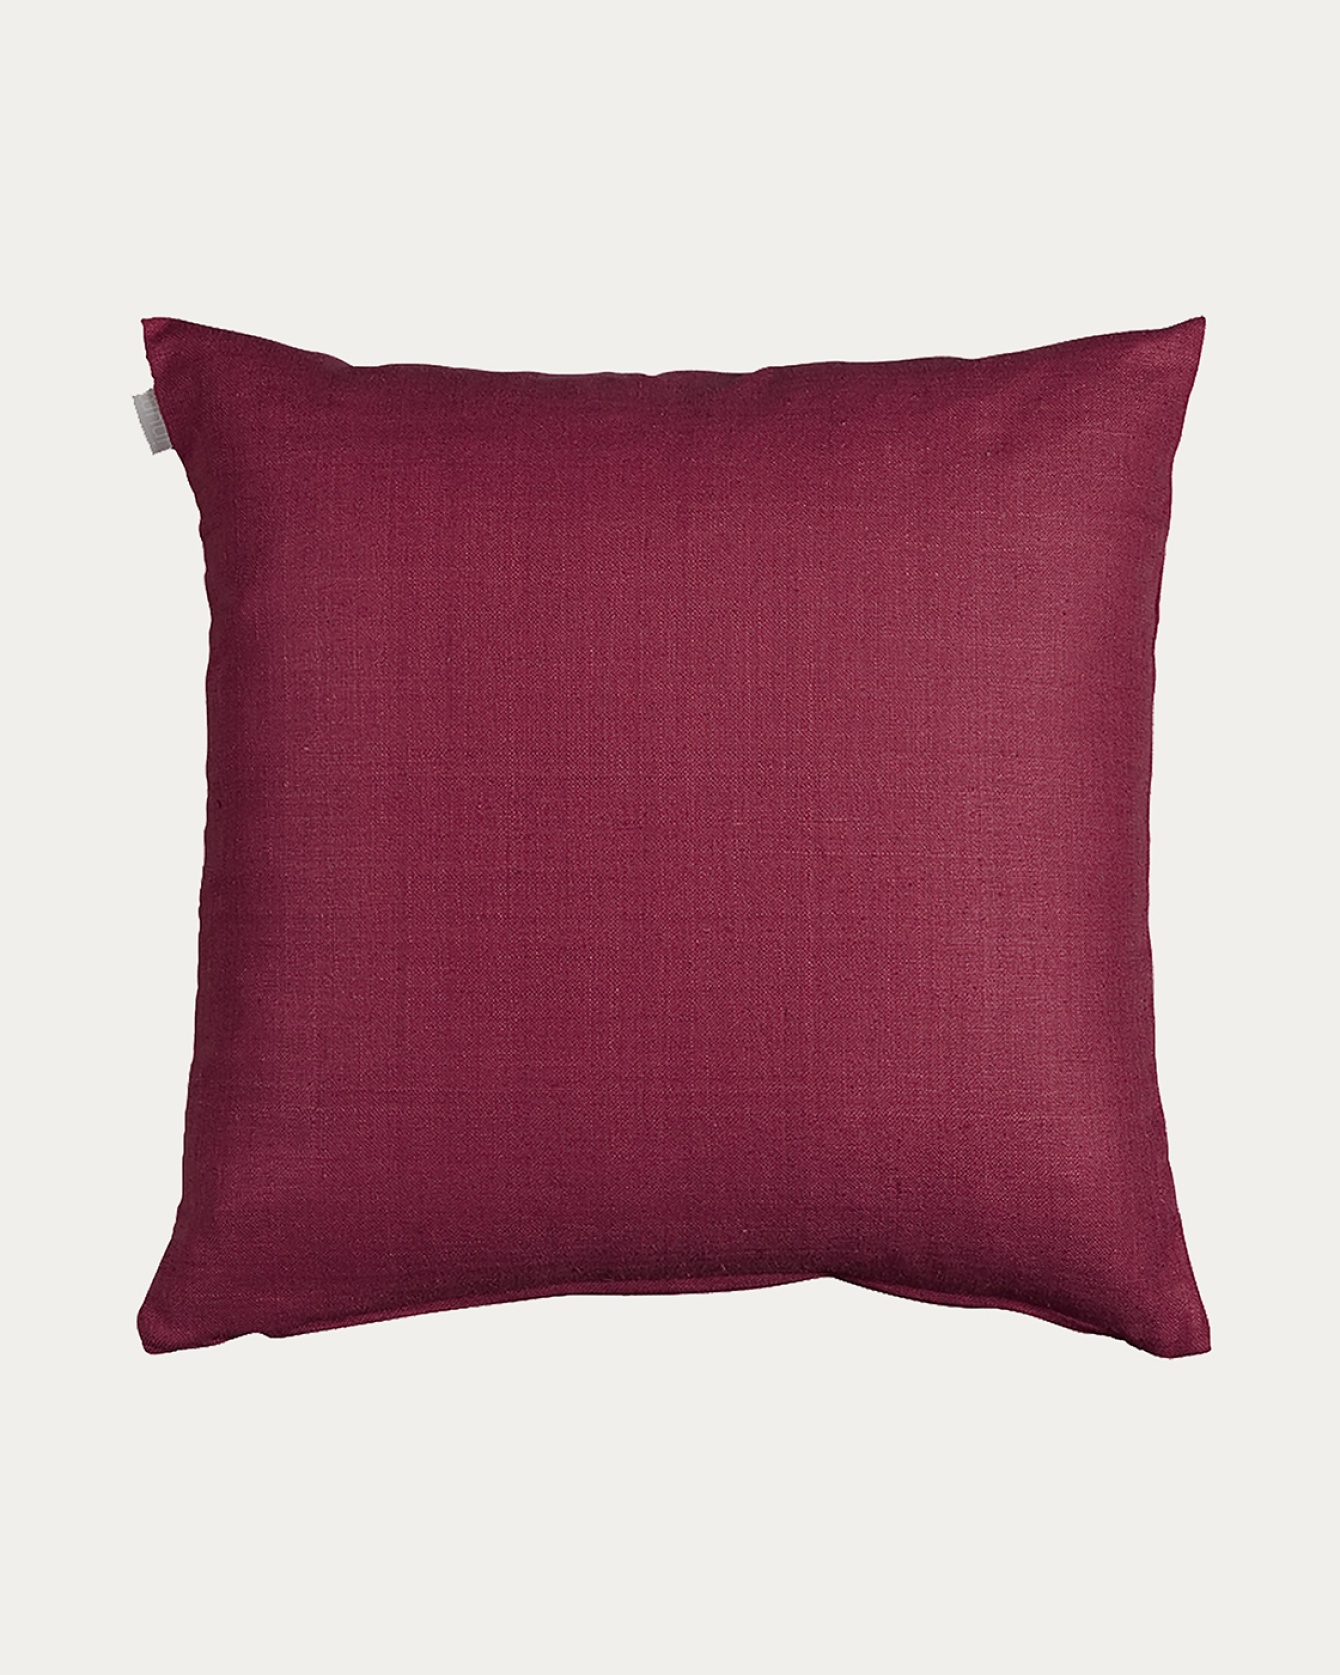 SETA Cushion cover 50x50 cm Burgundy red